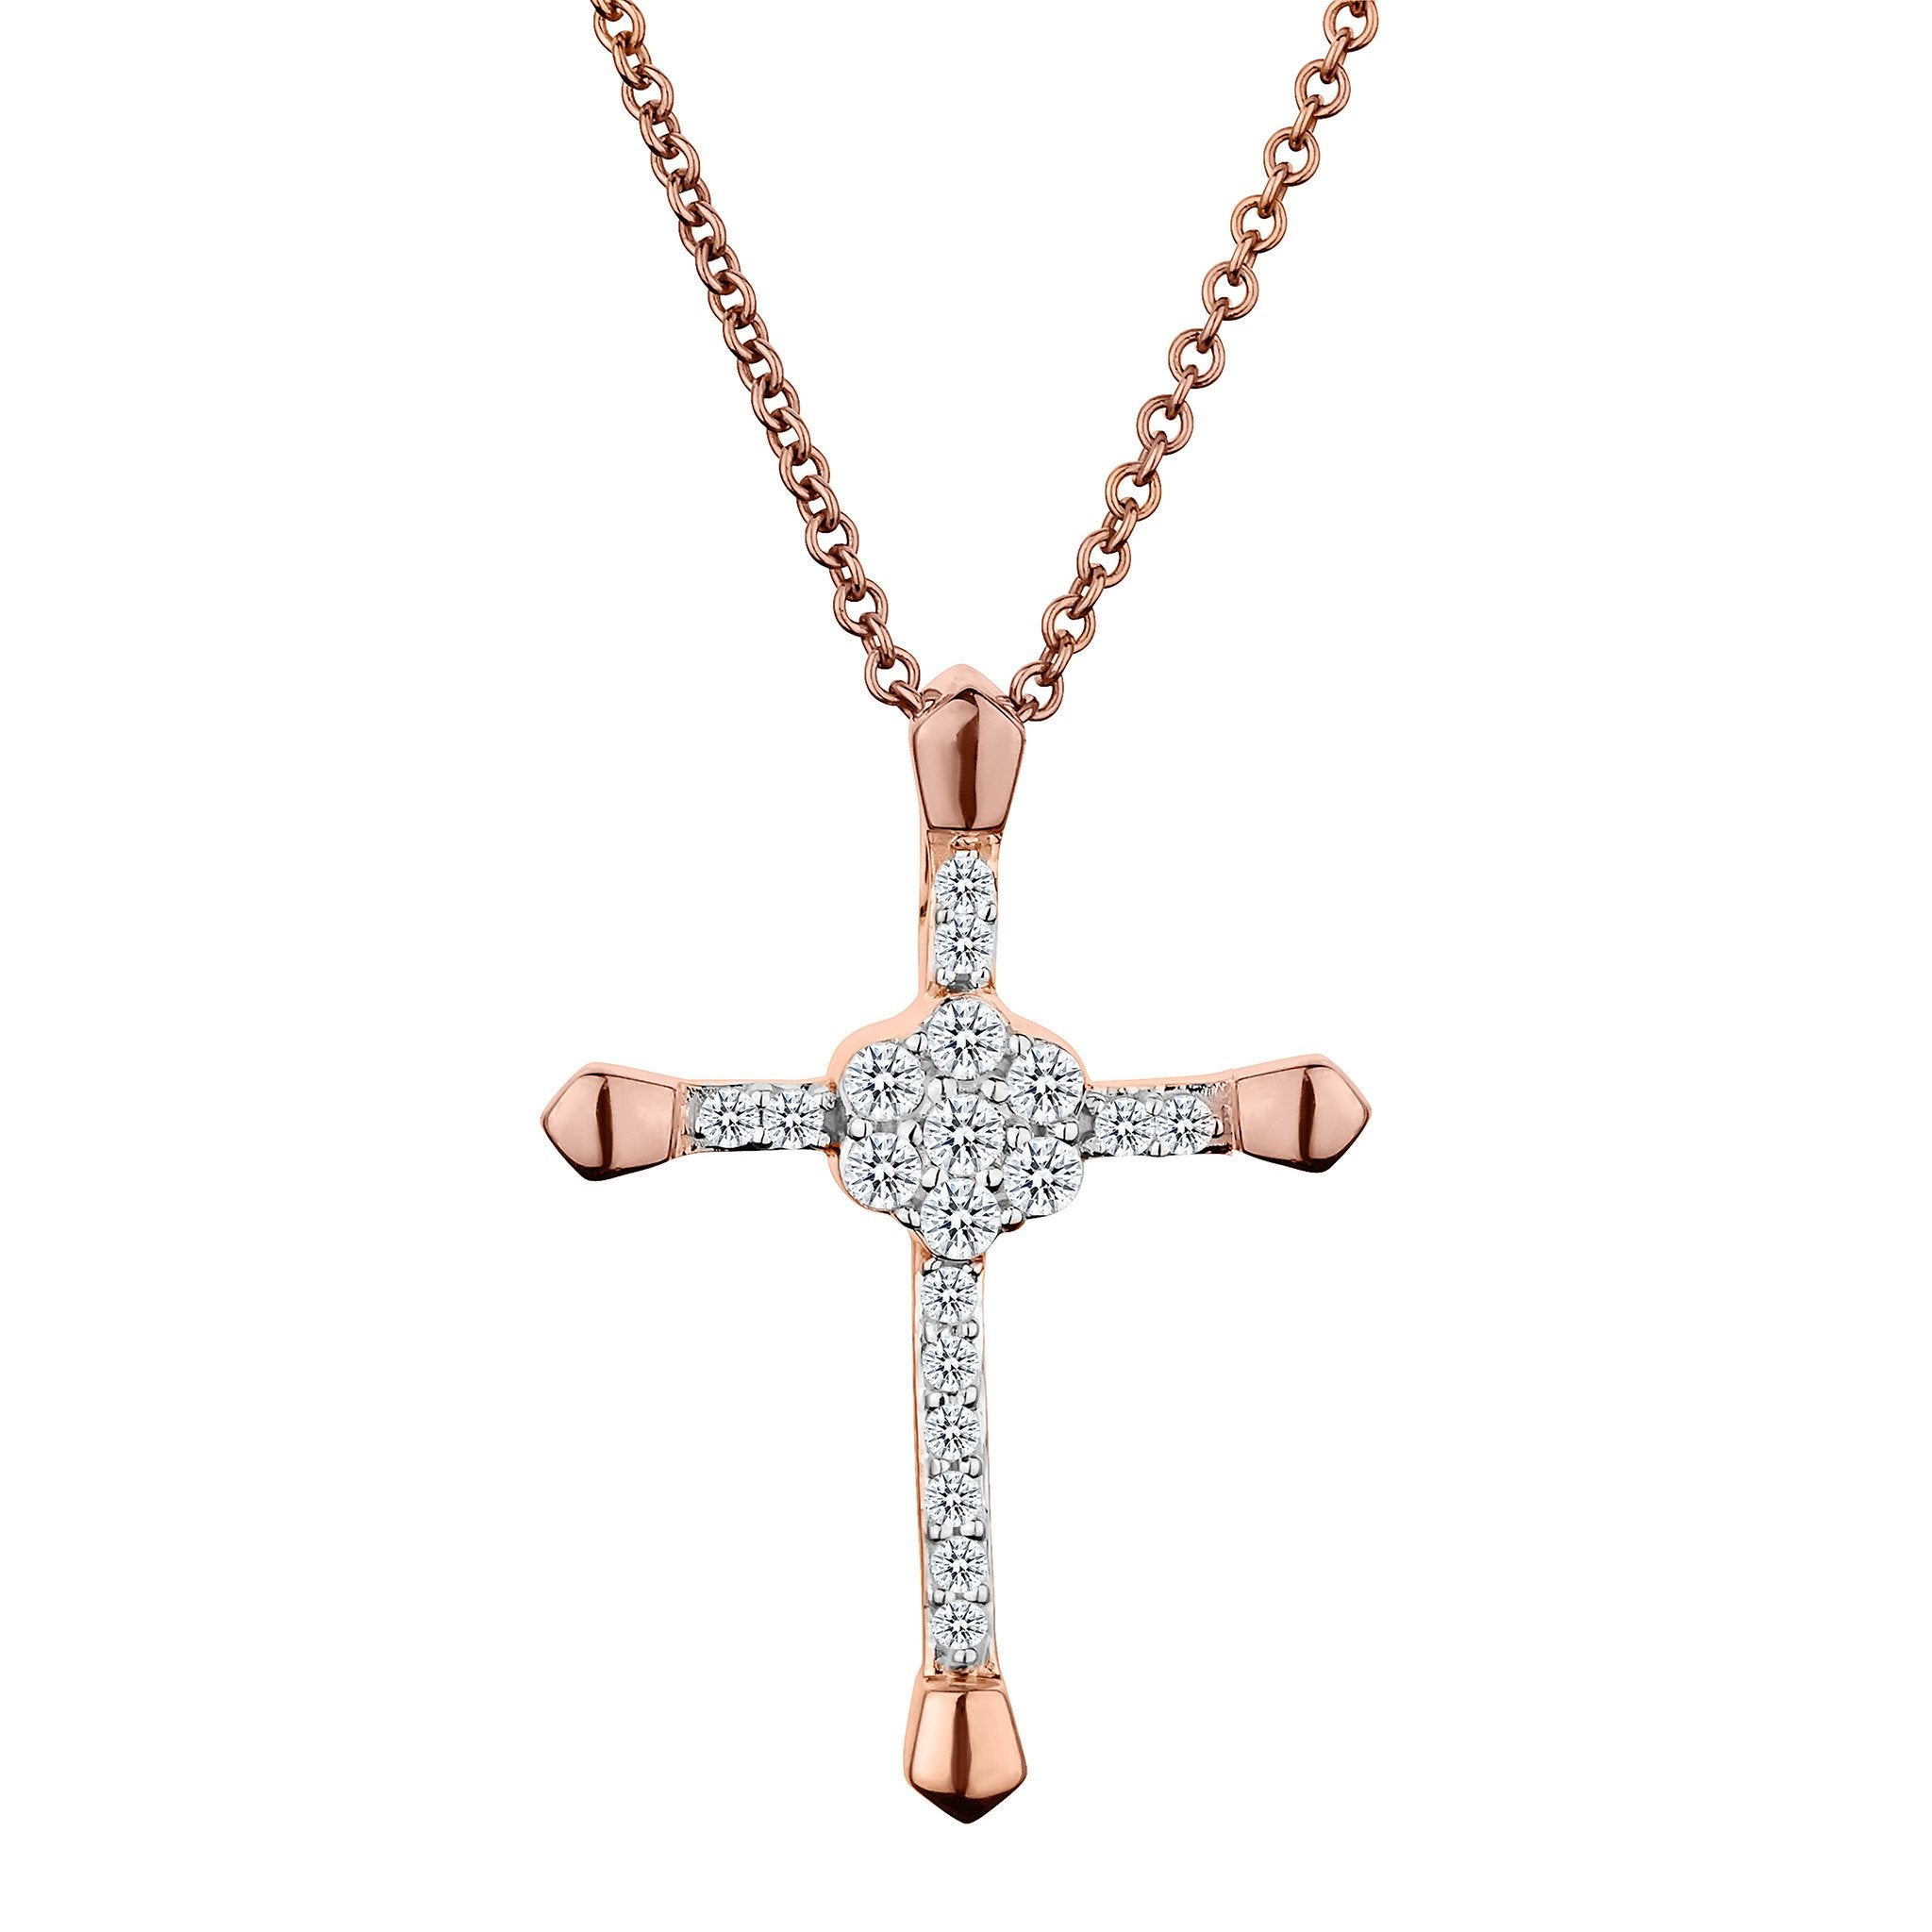 .15 Carat Diamond Cross Pendant,  10kt Rose Gold. Necklaces and Pendants. Griffin Jewellery Designs.